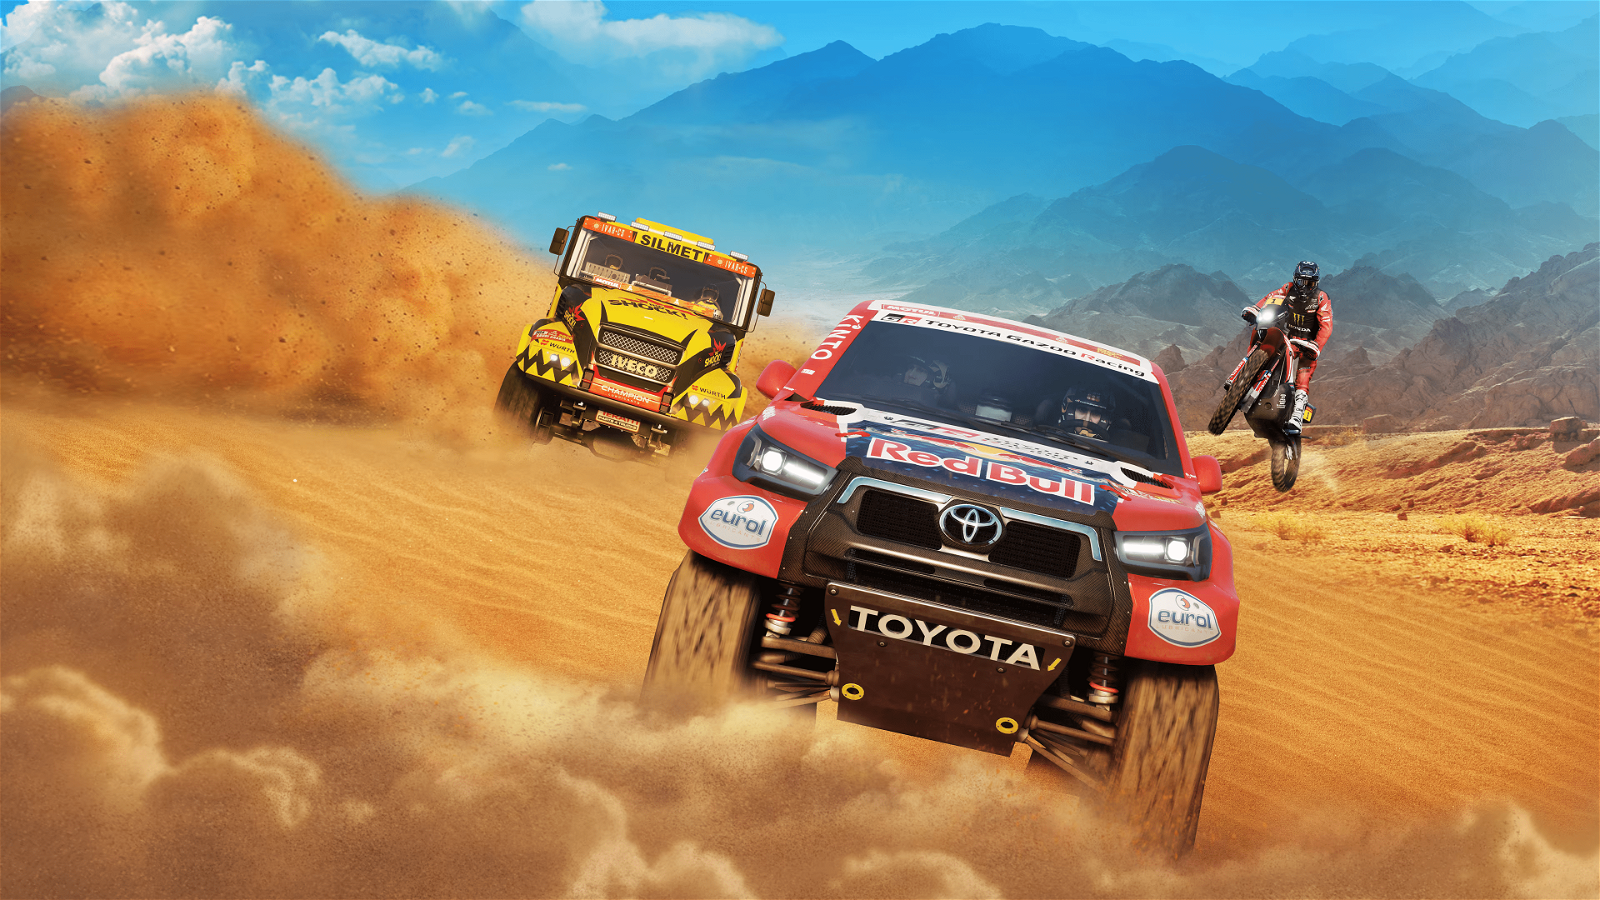 Enjoy a nail-biting race in Dakar Desert Rally while you wait